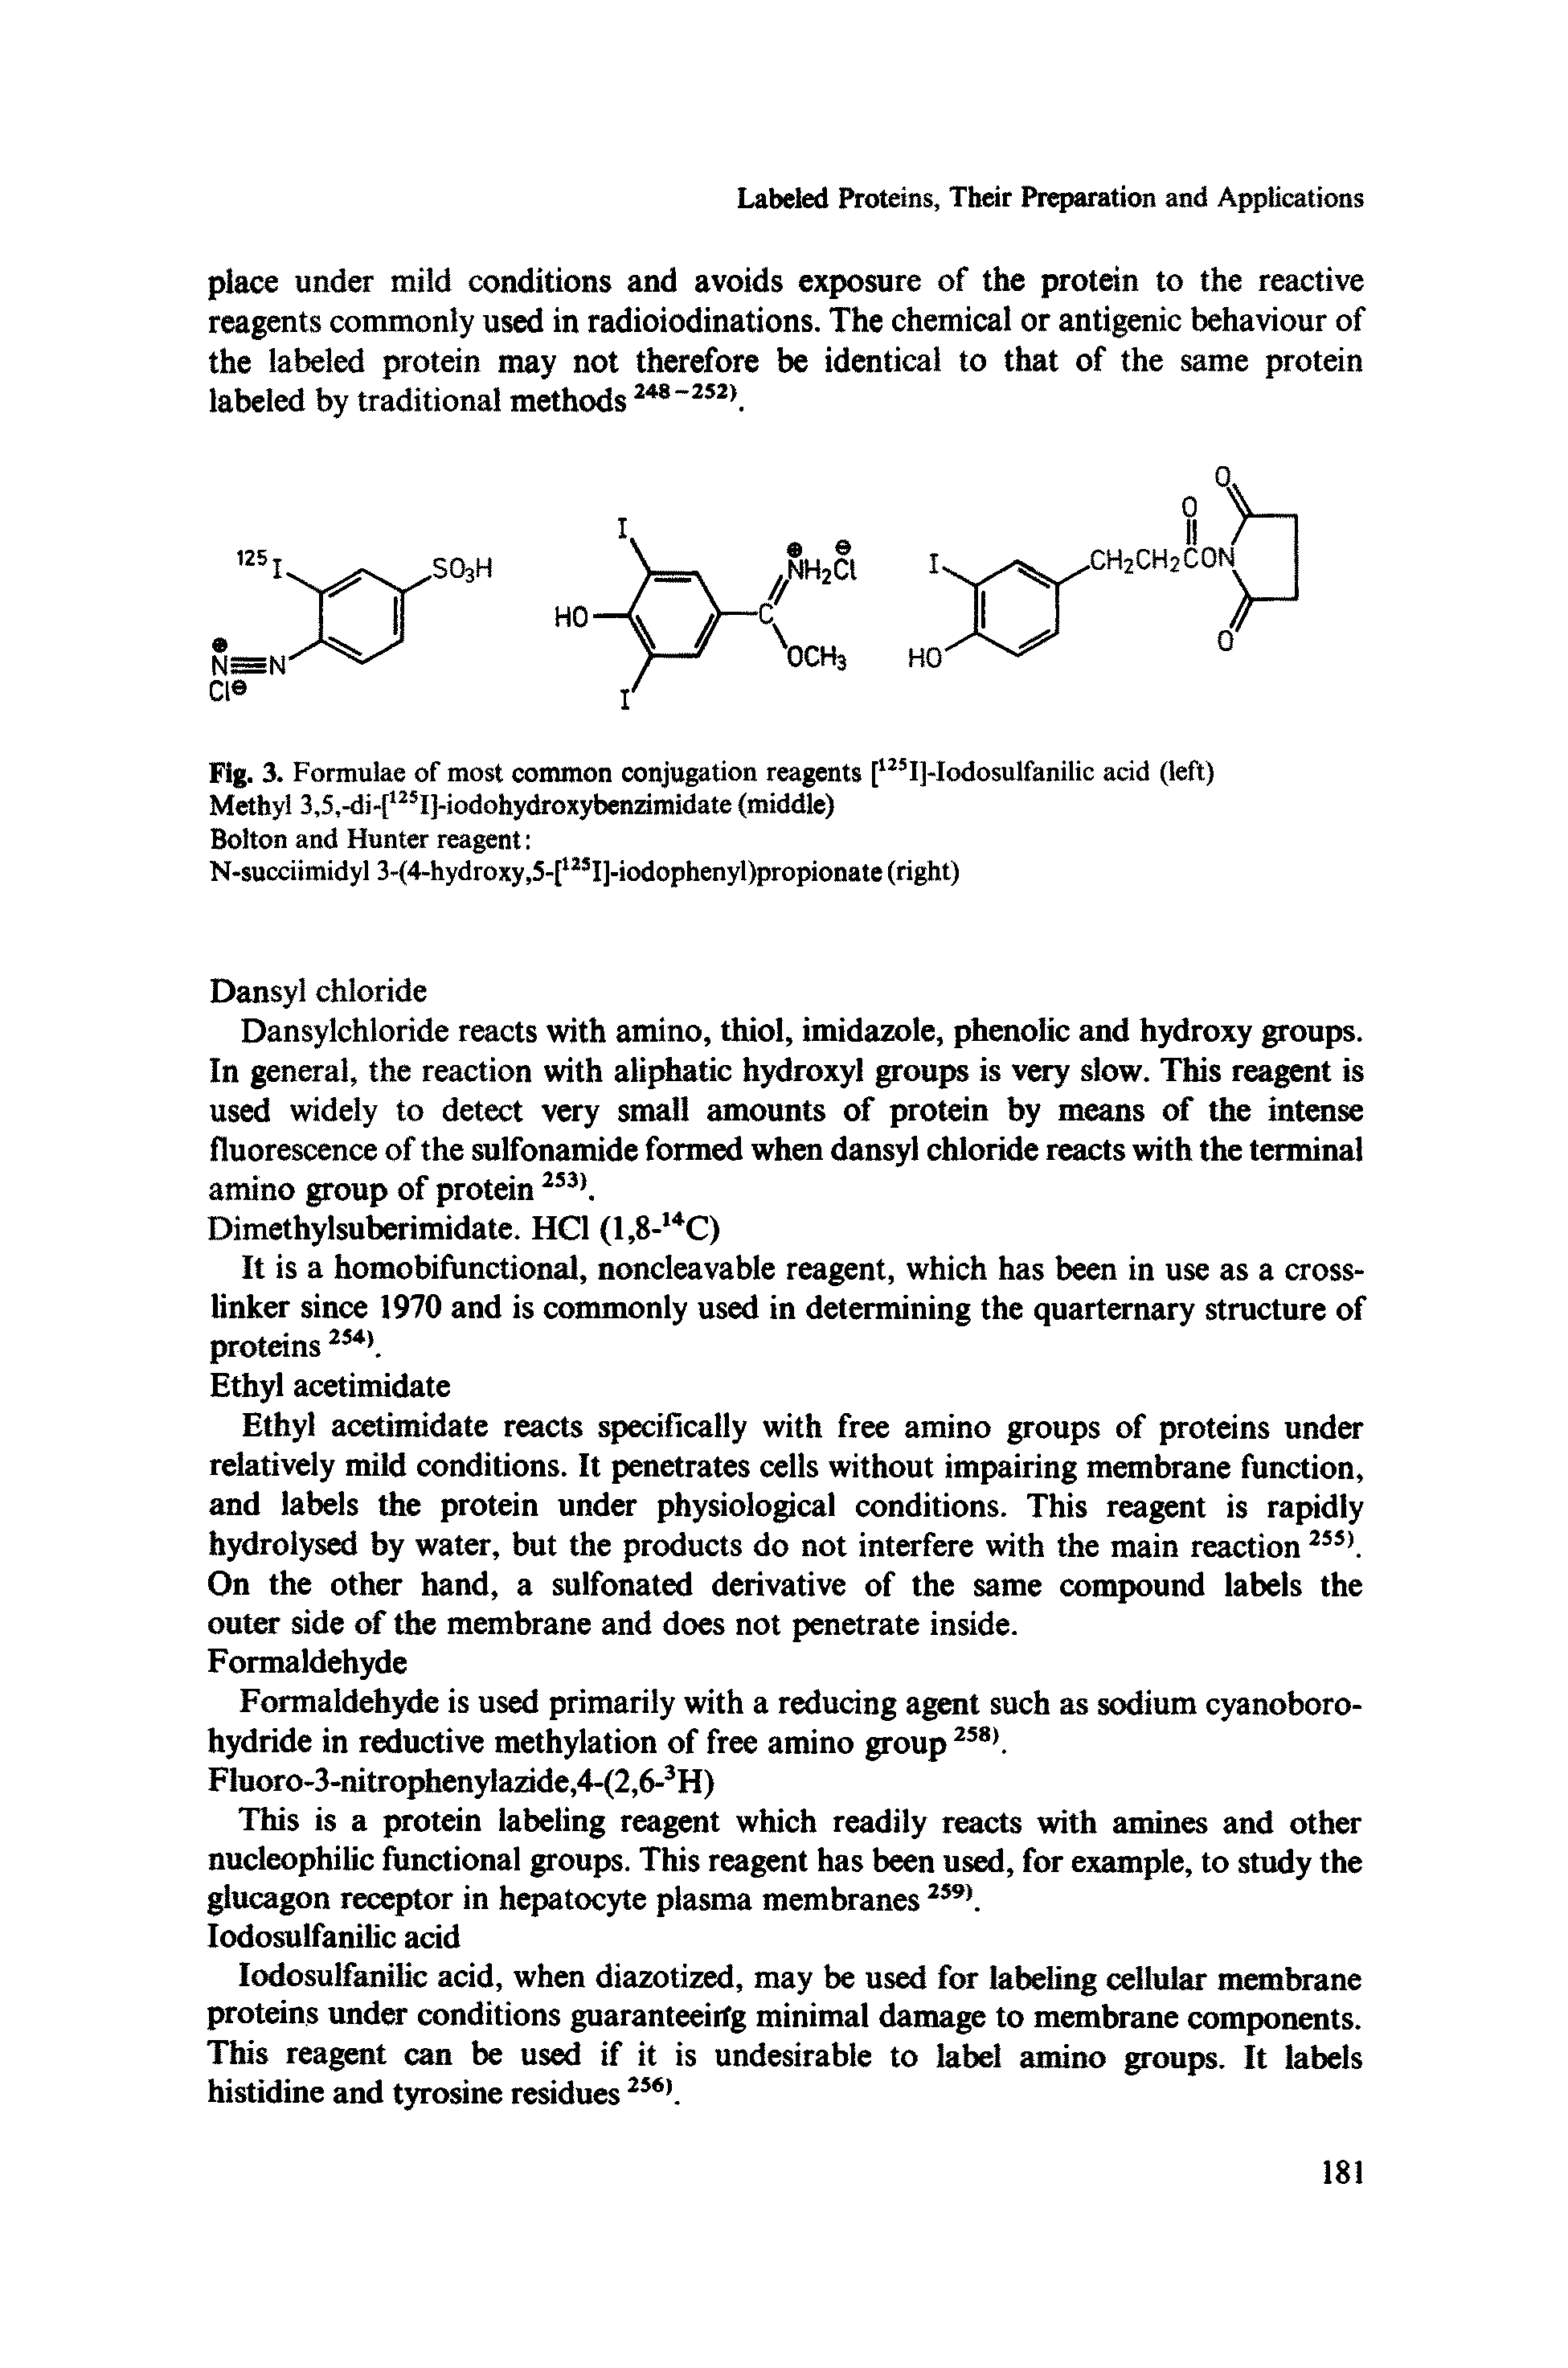 Fig. 3. Formulae of most common conjugation reagents f I]-Iodosulfanilic acid (left) Methyl 3,5,-di-[ I]-iodohydroxybenzimidate (middle)...